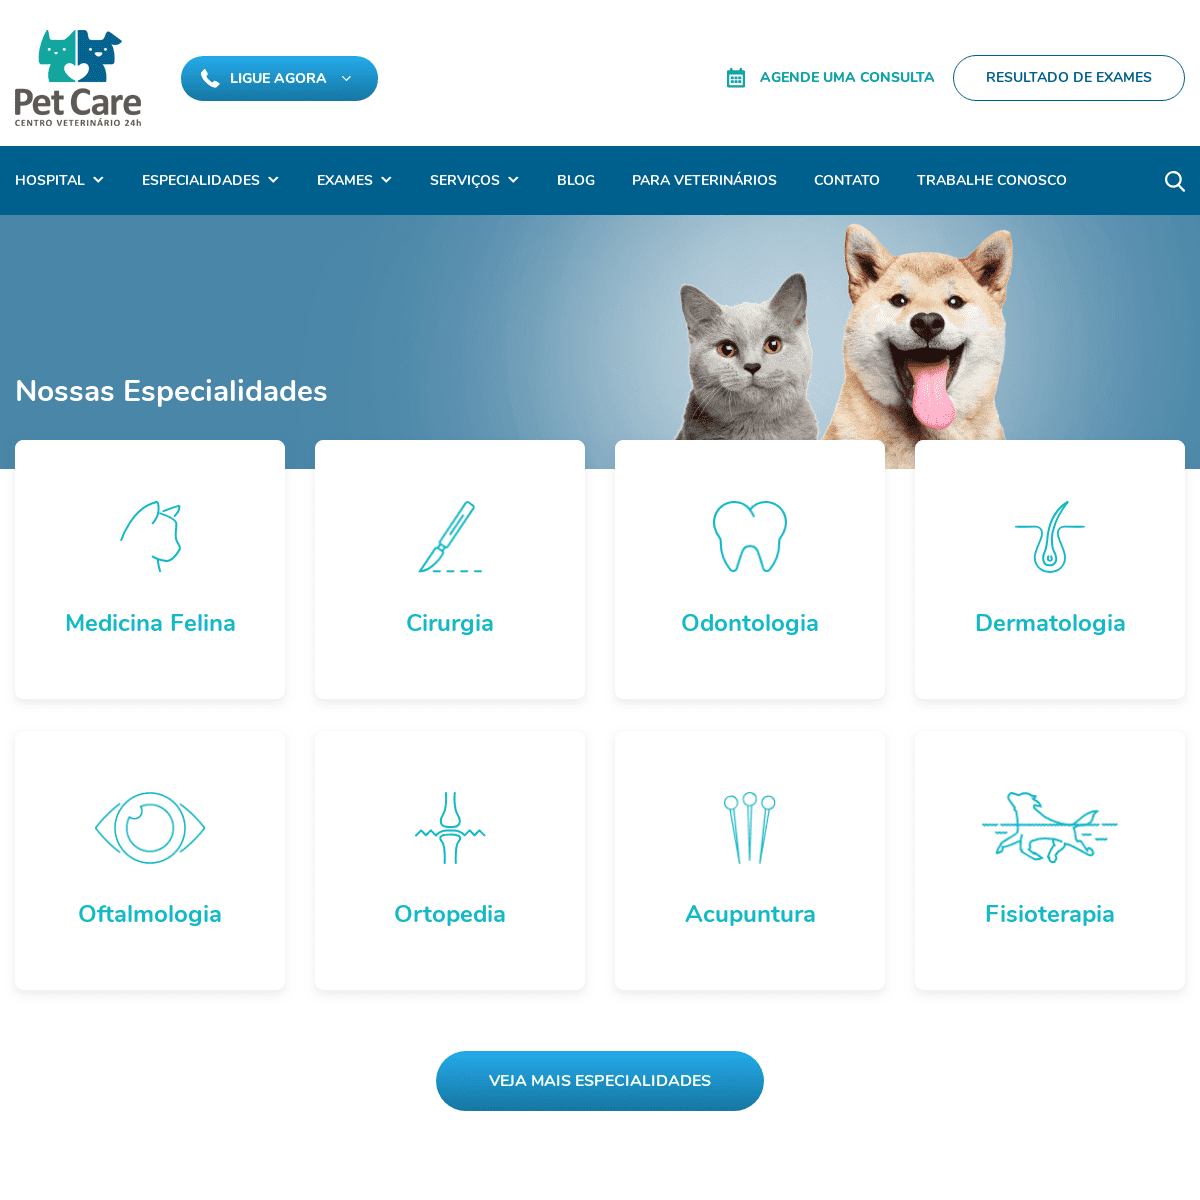 A complete backup of petcare.com.br